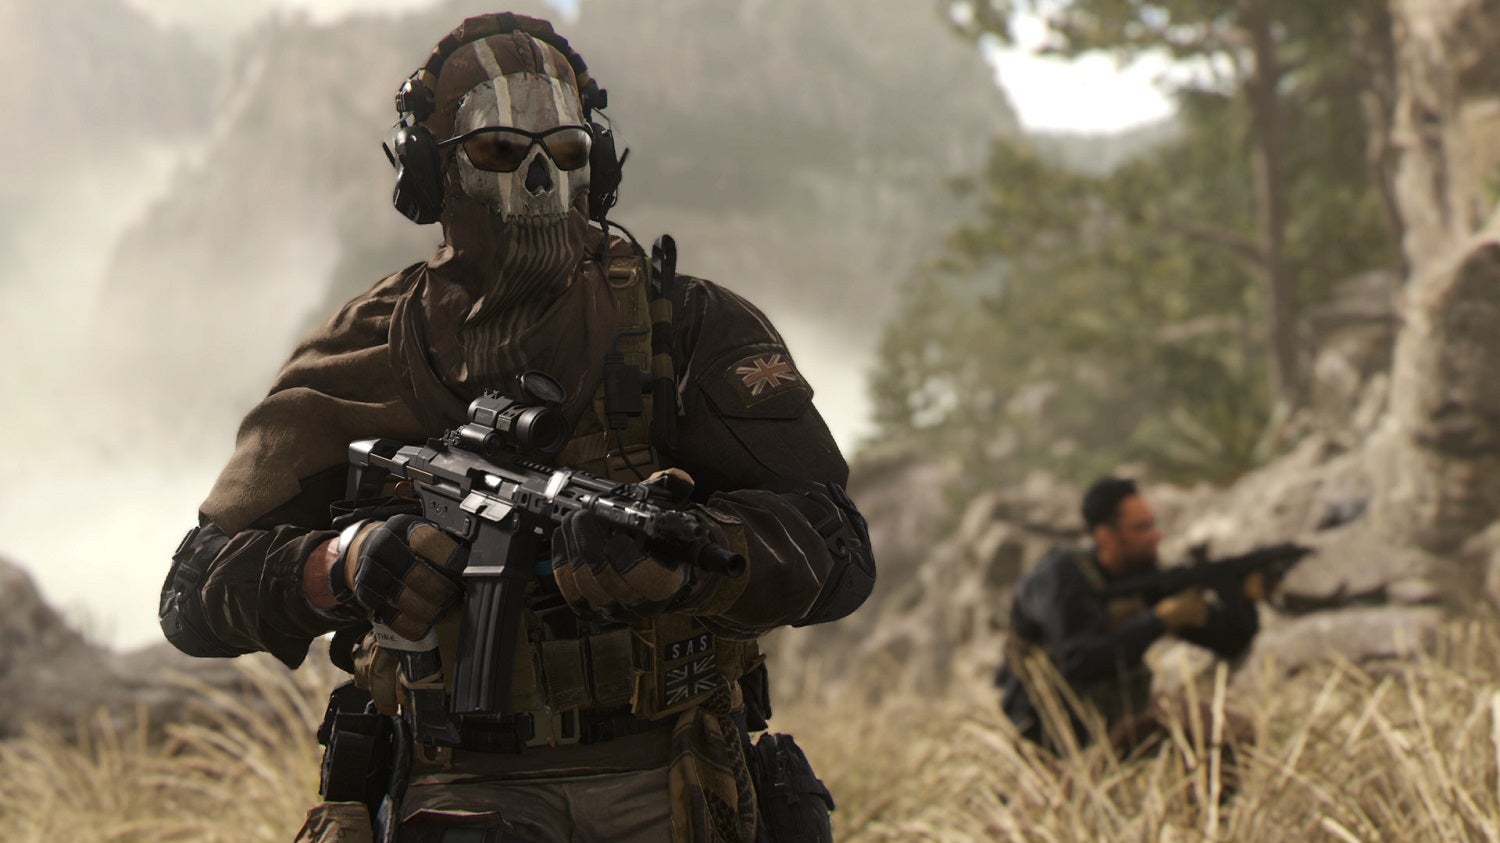 Screen z gry Call of Duty: Modern Warfare 2